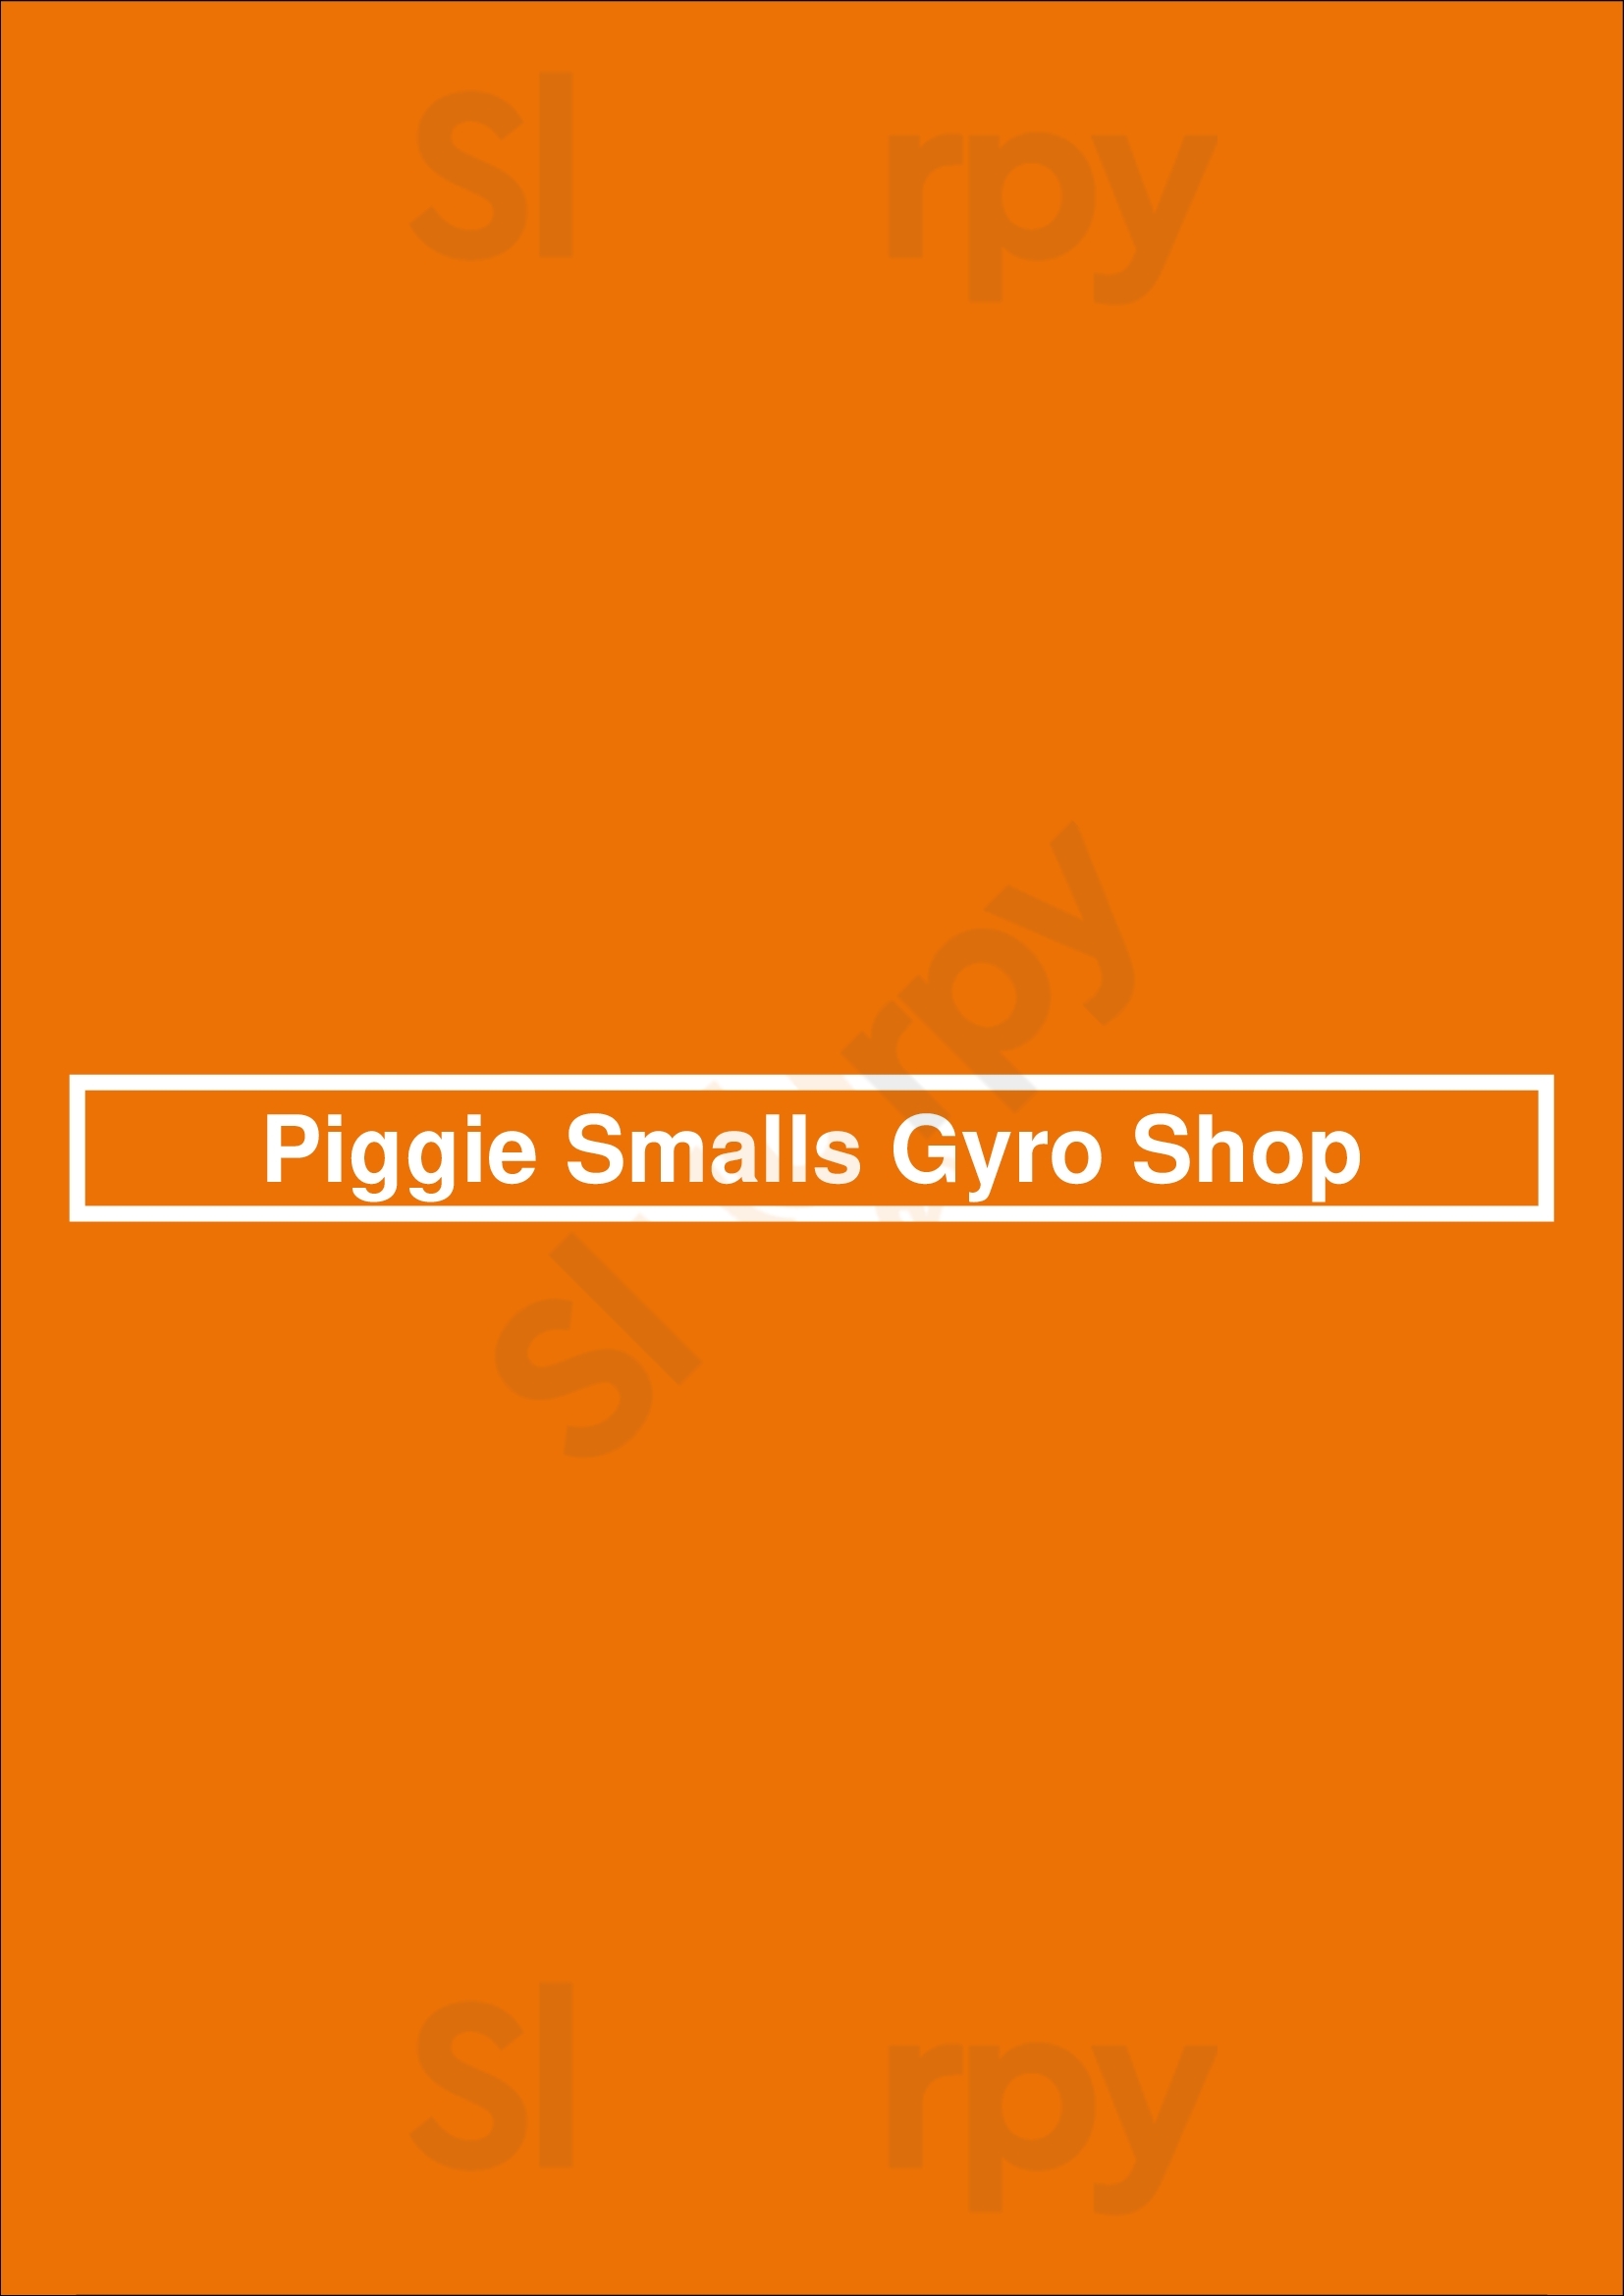 Piggie Smalls Gyro Shop Chicago Menu - 1